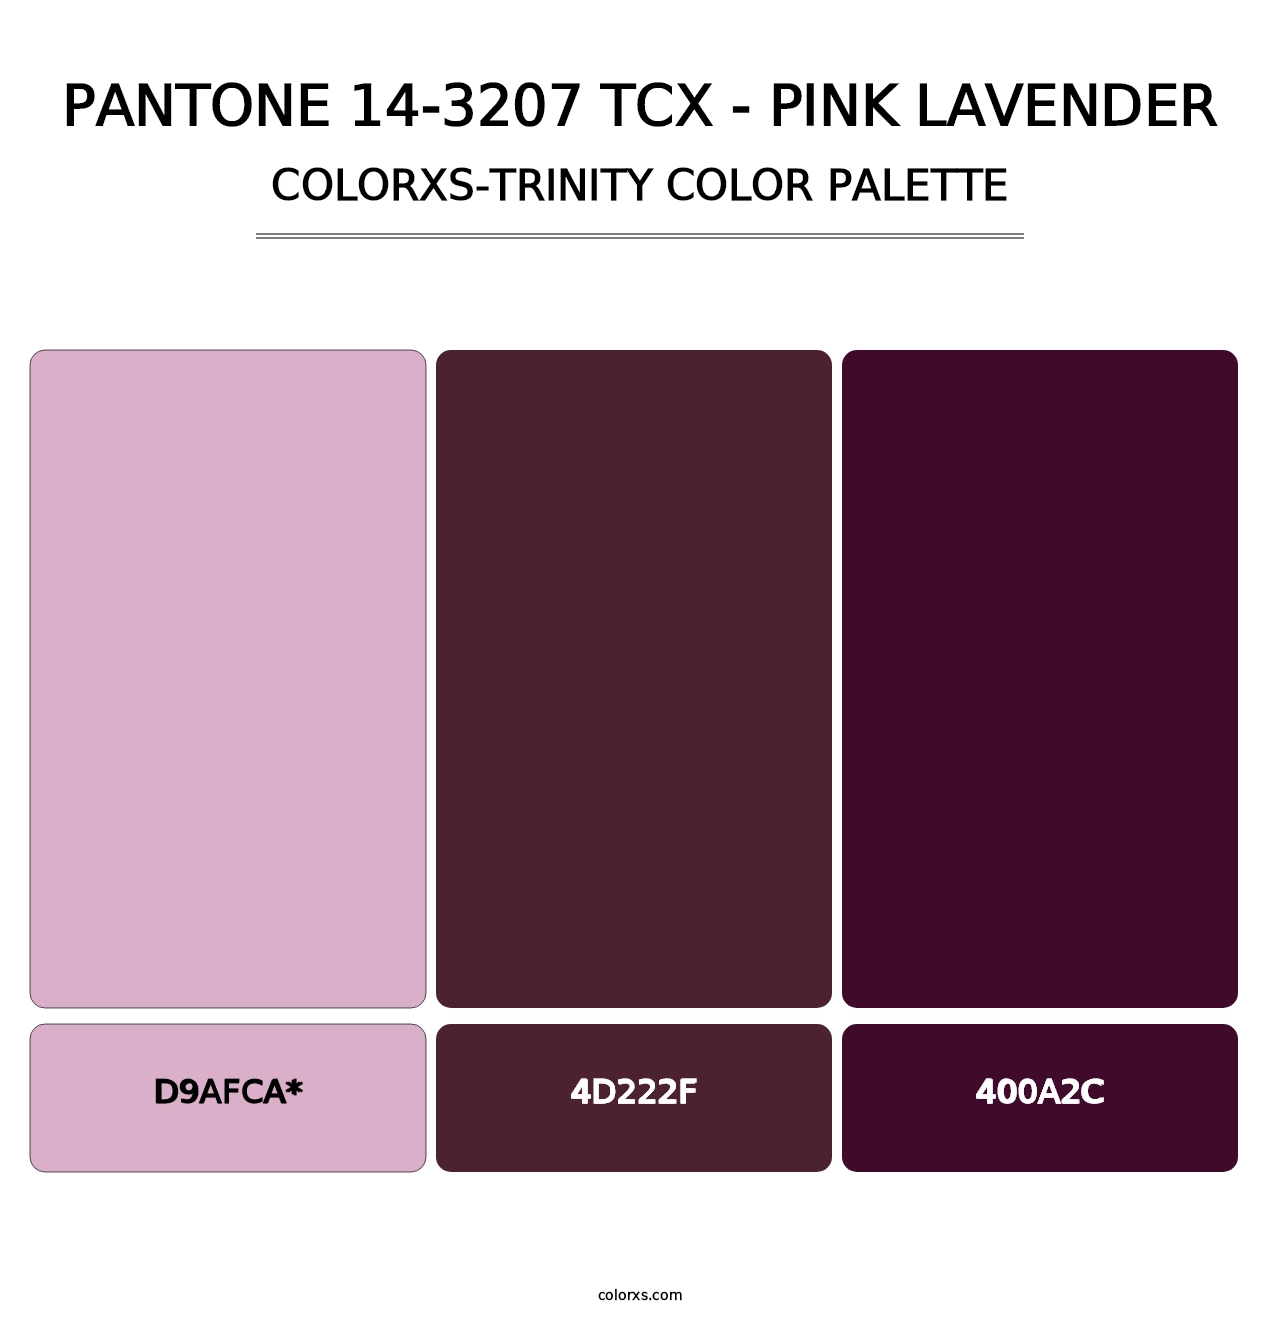 PANTONE 14-3207 TCX - Pink Lavender - Colorxs Trinity Palette